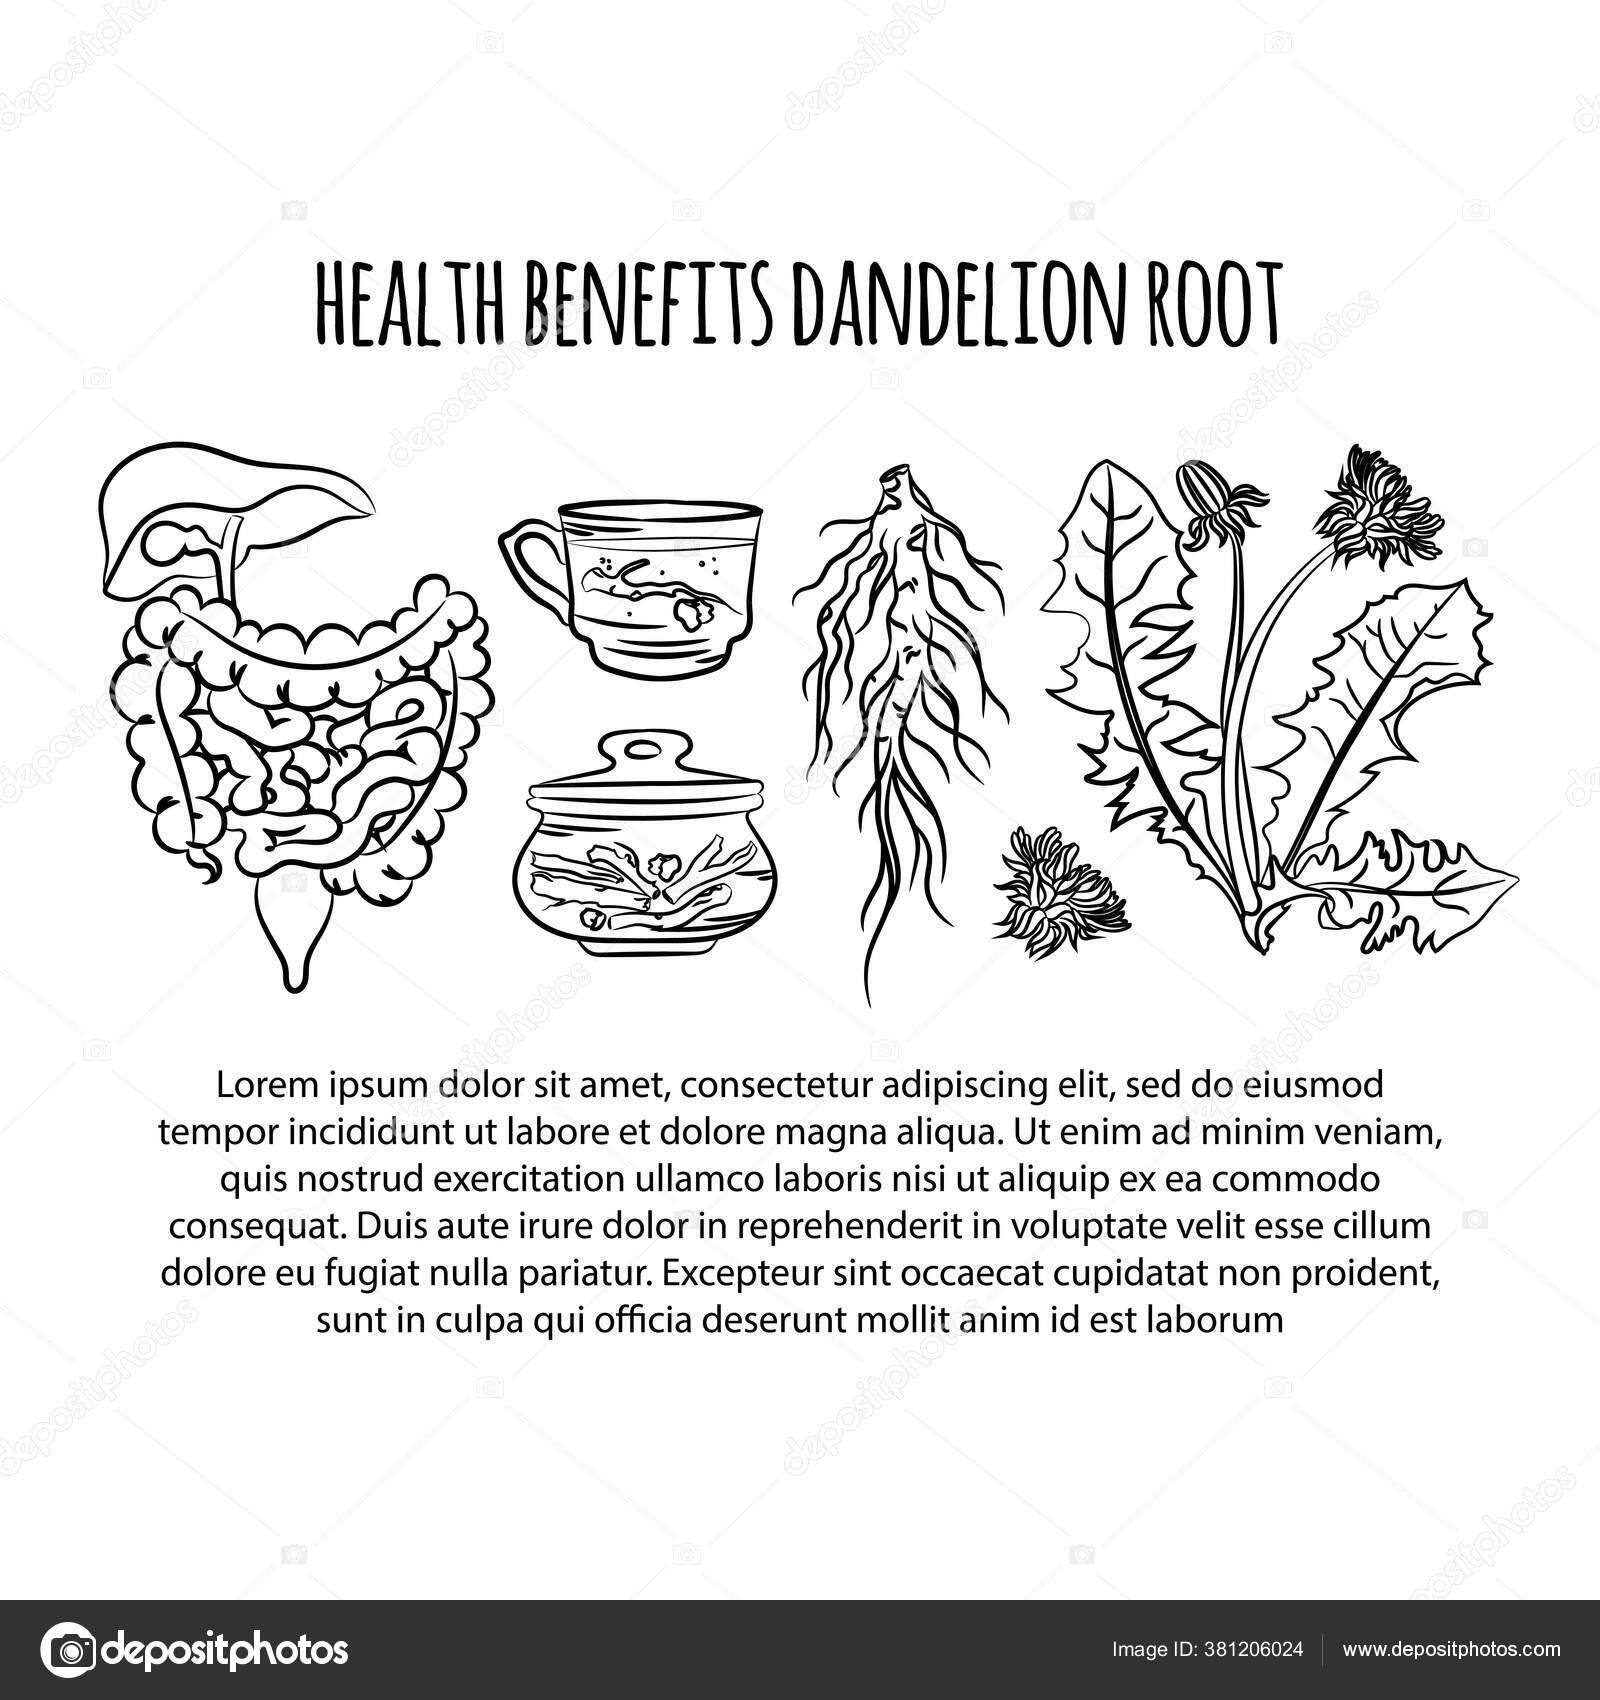 https://st4.depositphotos.com/16931846/38120/v/1600/depositphotos_381206024-stock-illustration-dandelion-health-benefits-plant-medical.jpg